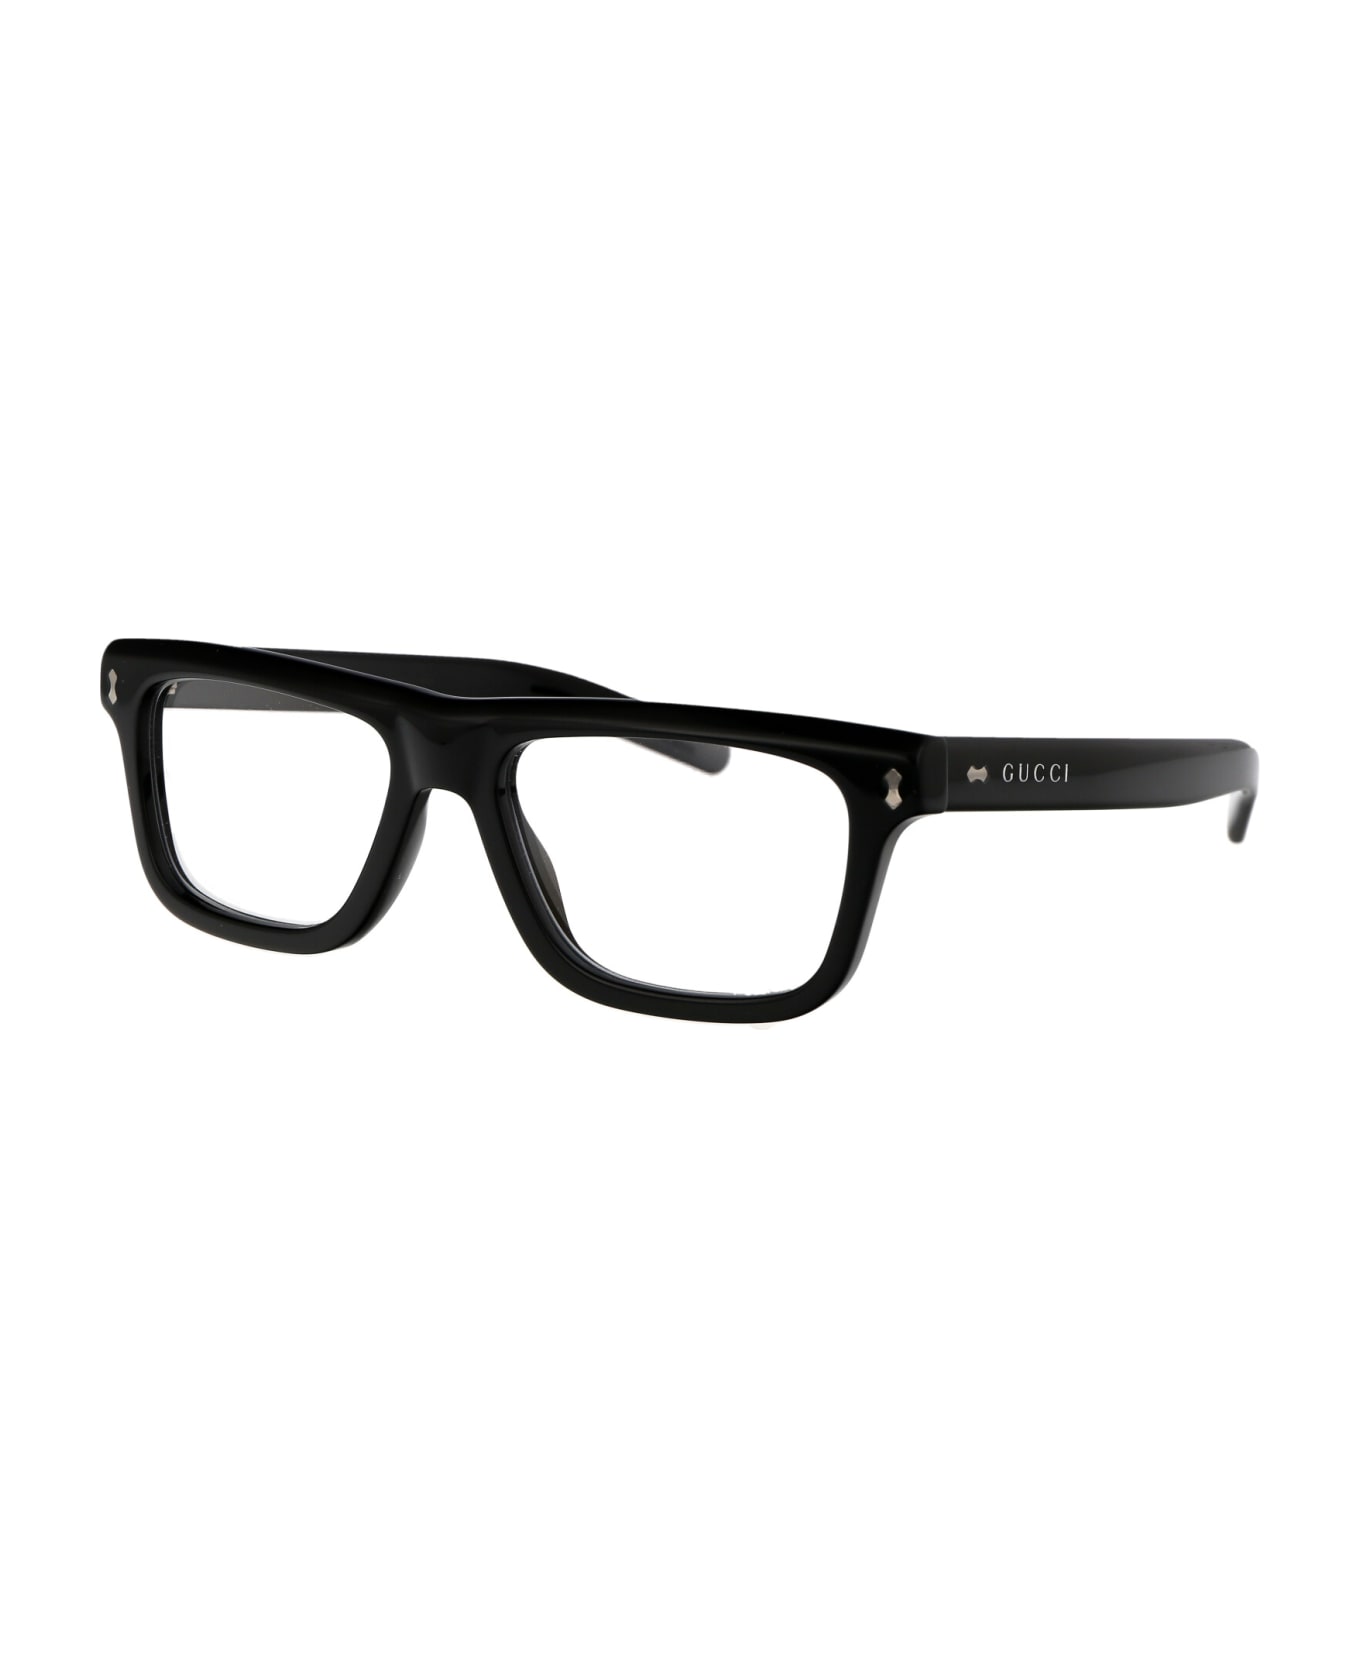 Gucci Eyewear Gg1525o Glasses - 001 BLACK BLACK TRANSPARENT アイウェア